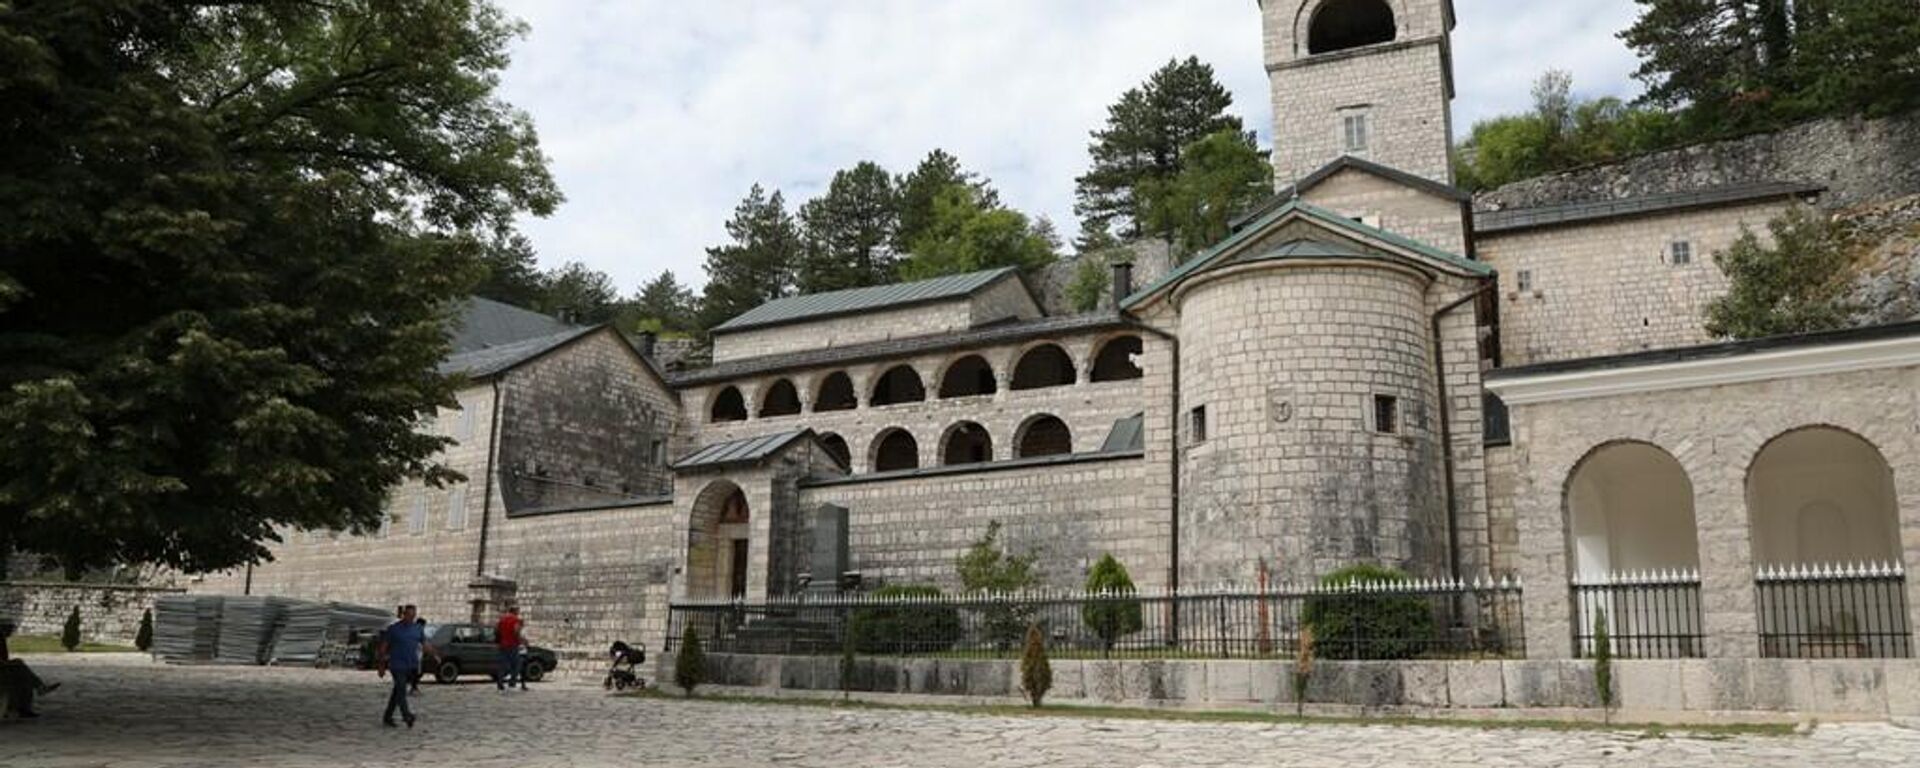 Poslednje pripreme pred ustoličenje mitropolita Joanikija u Cetinjskom manastiru - Sputnik Srbija, 1920, 14.09.2021